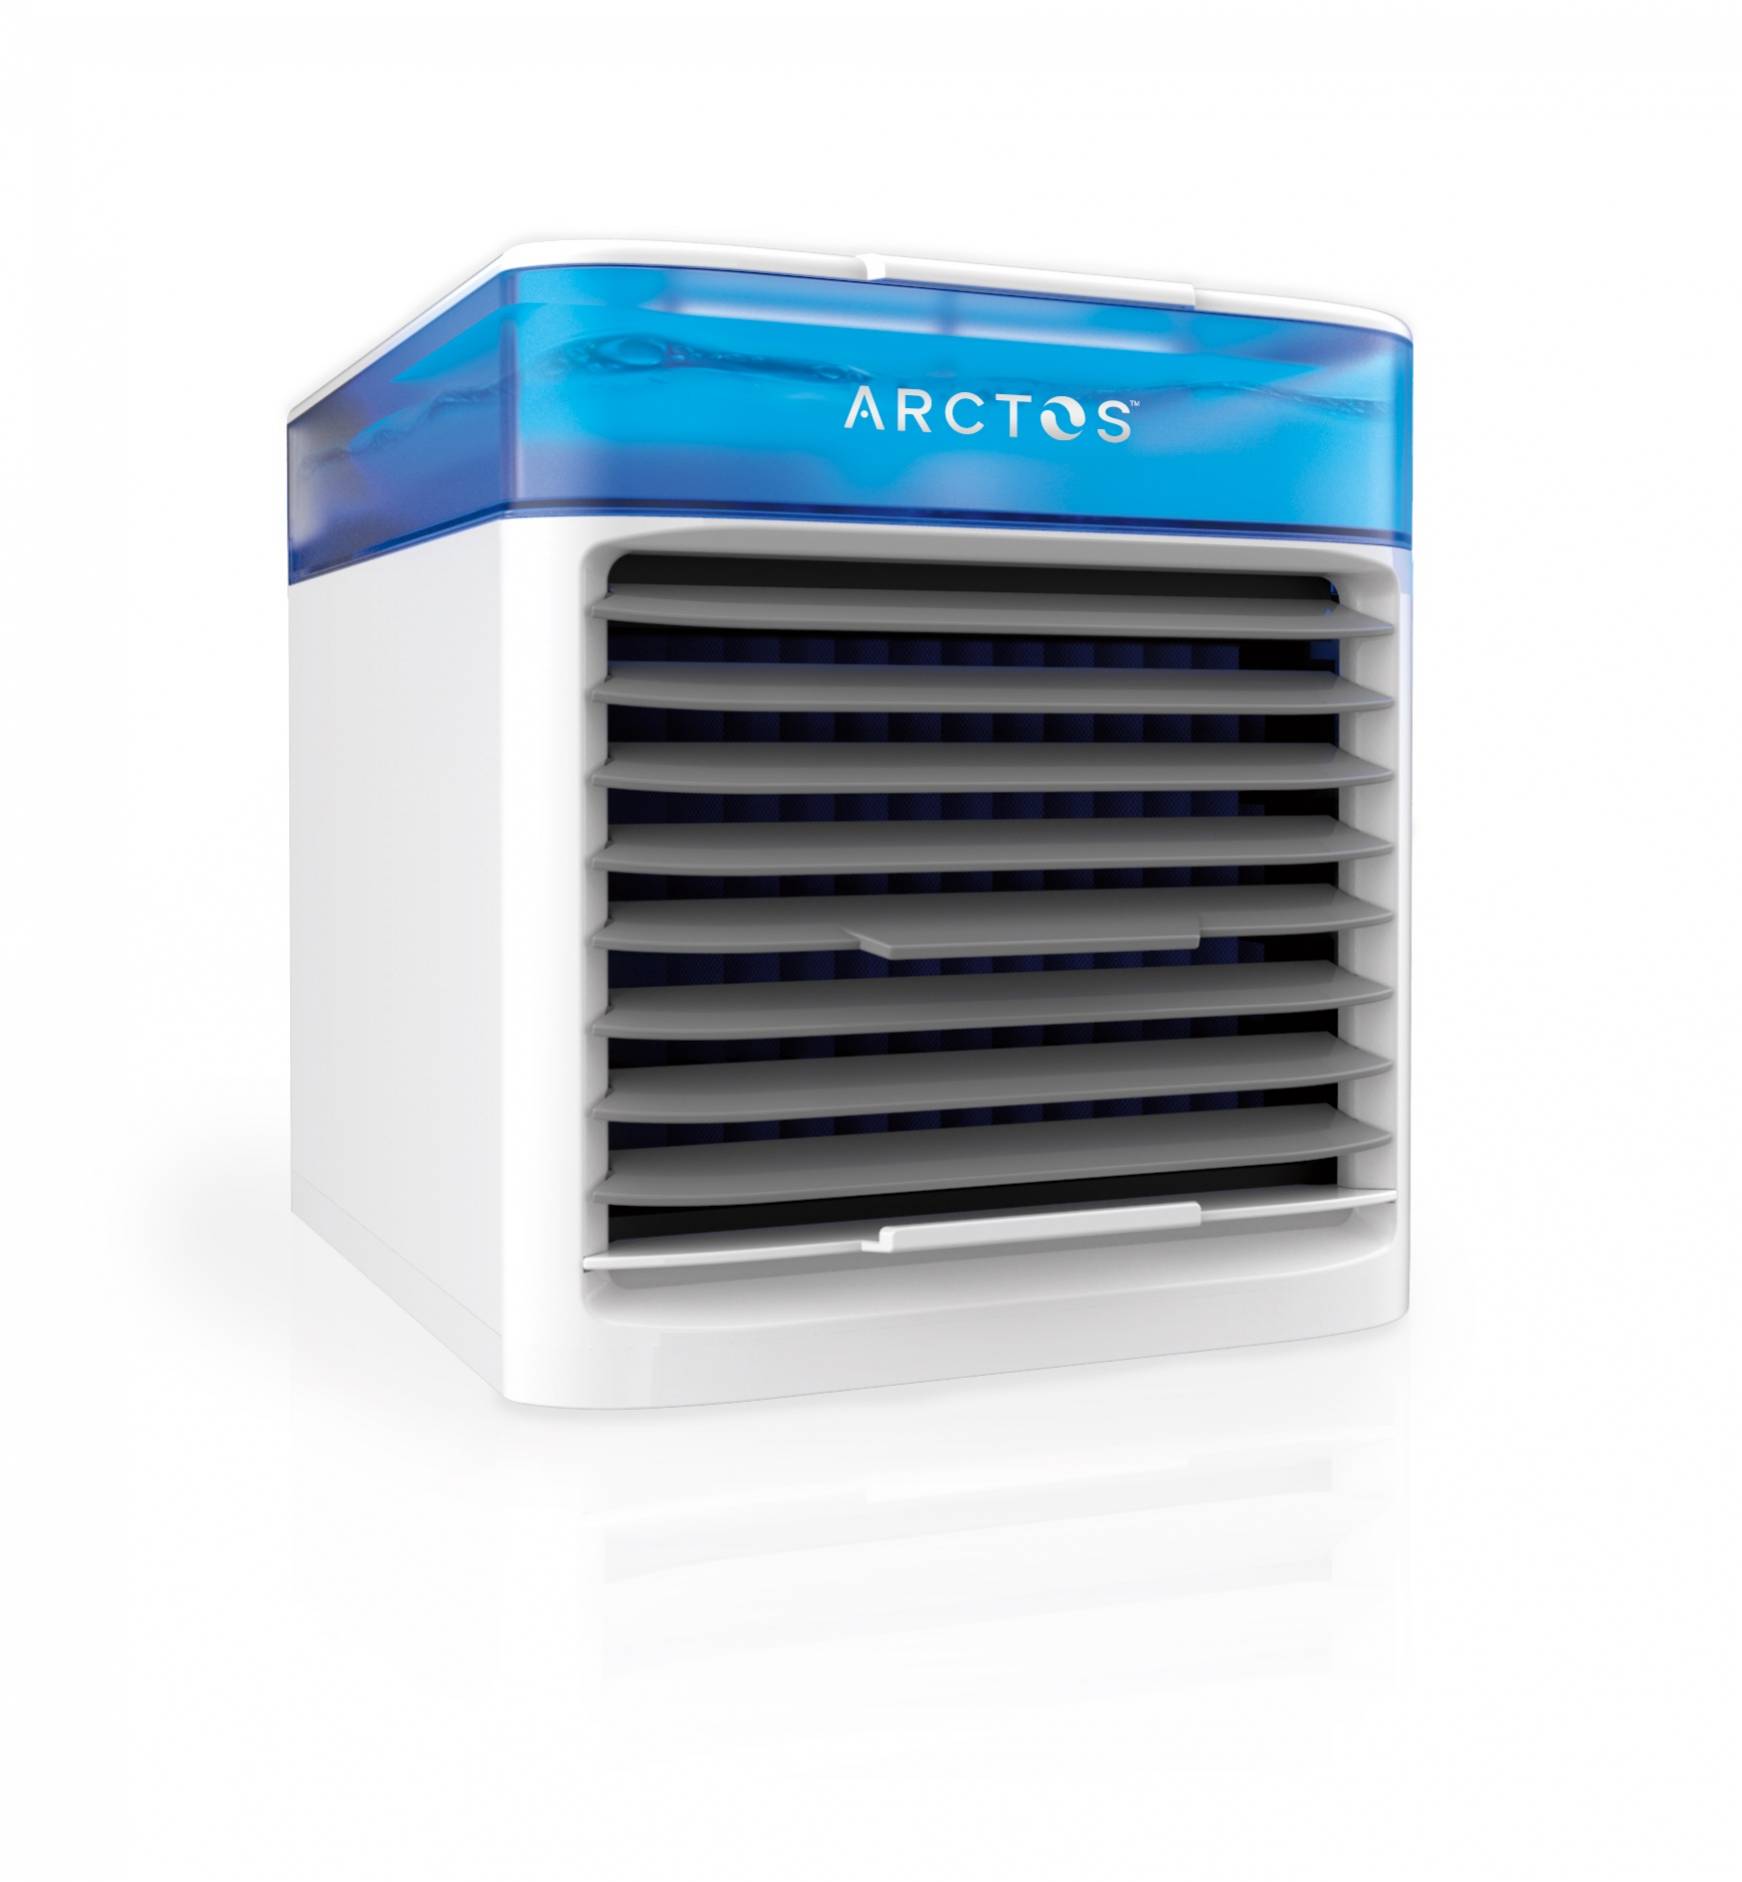 Arctos Cooler Video